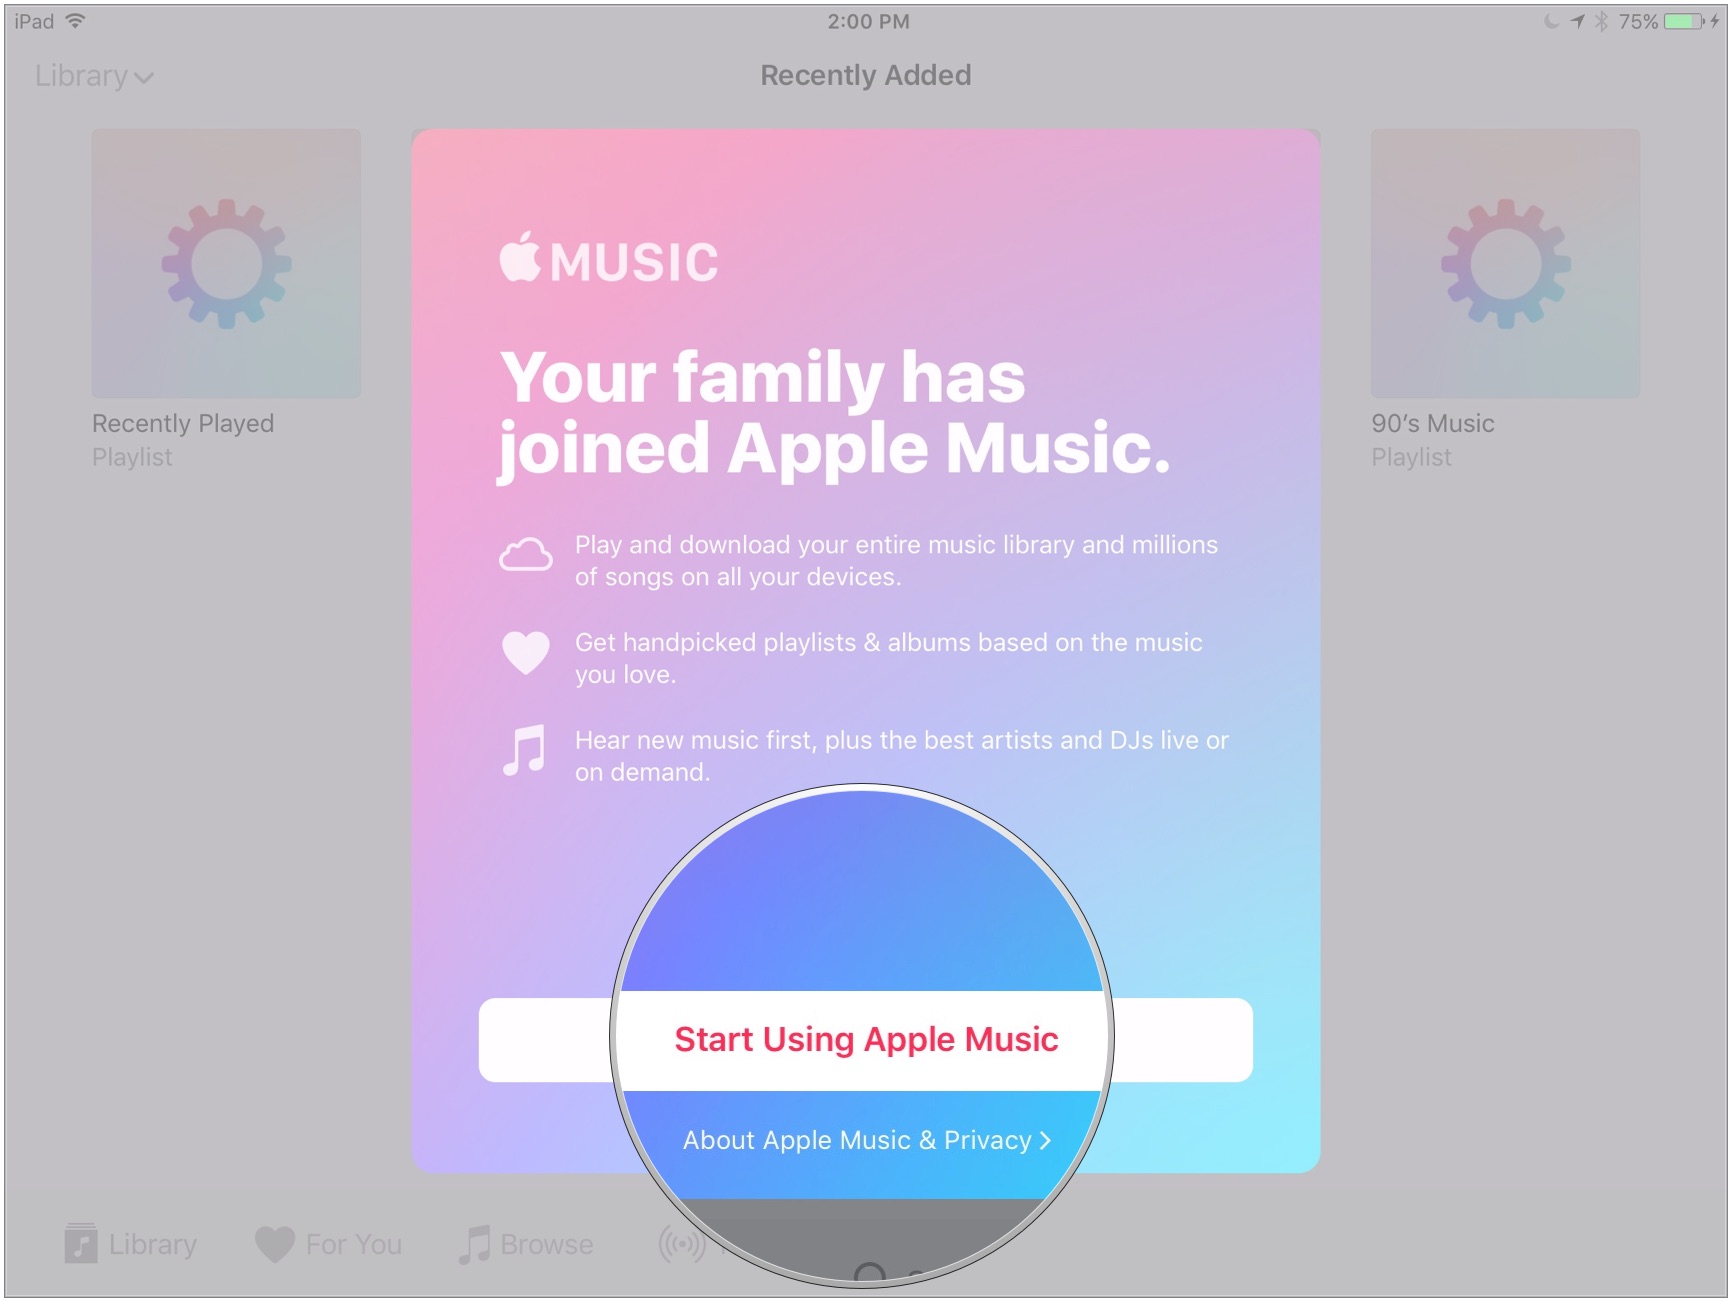 Tap Start Using Apple Music